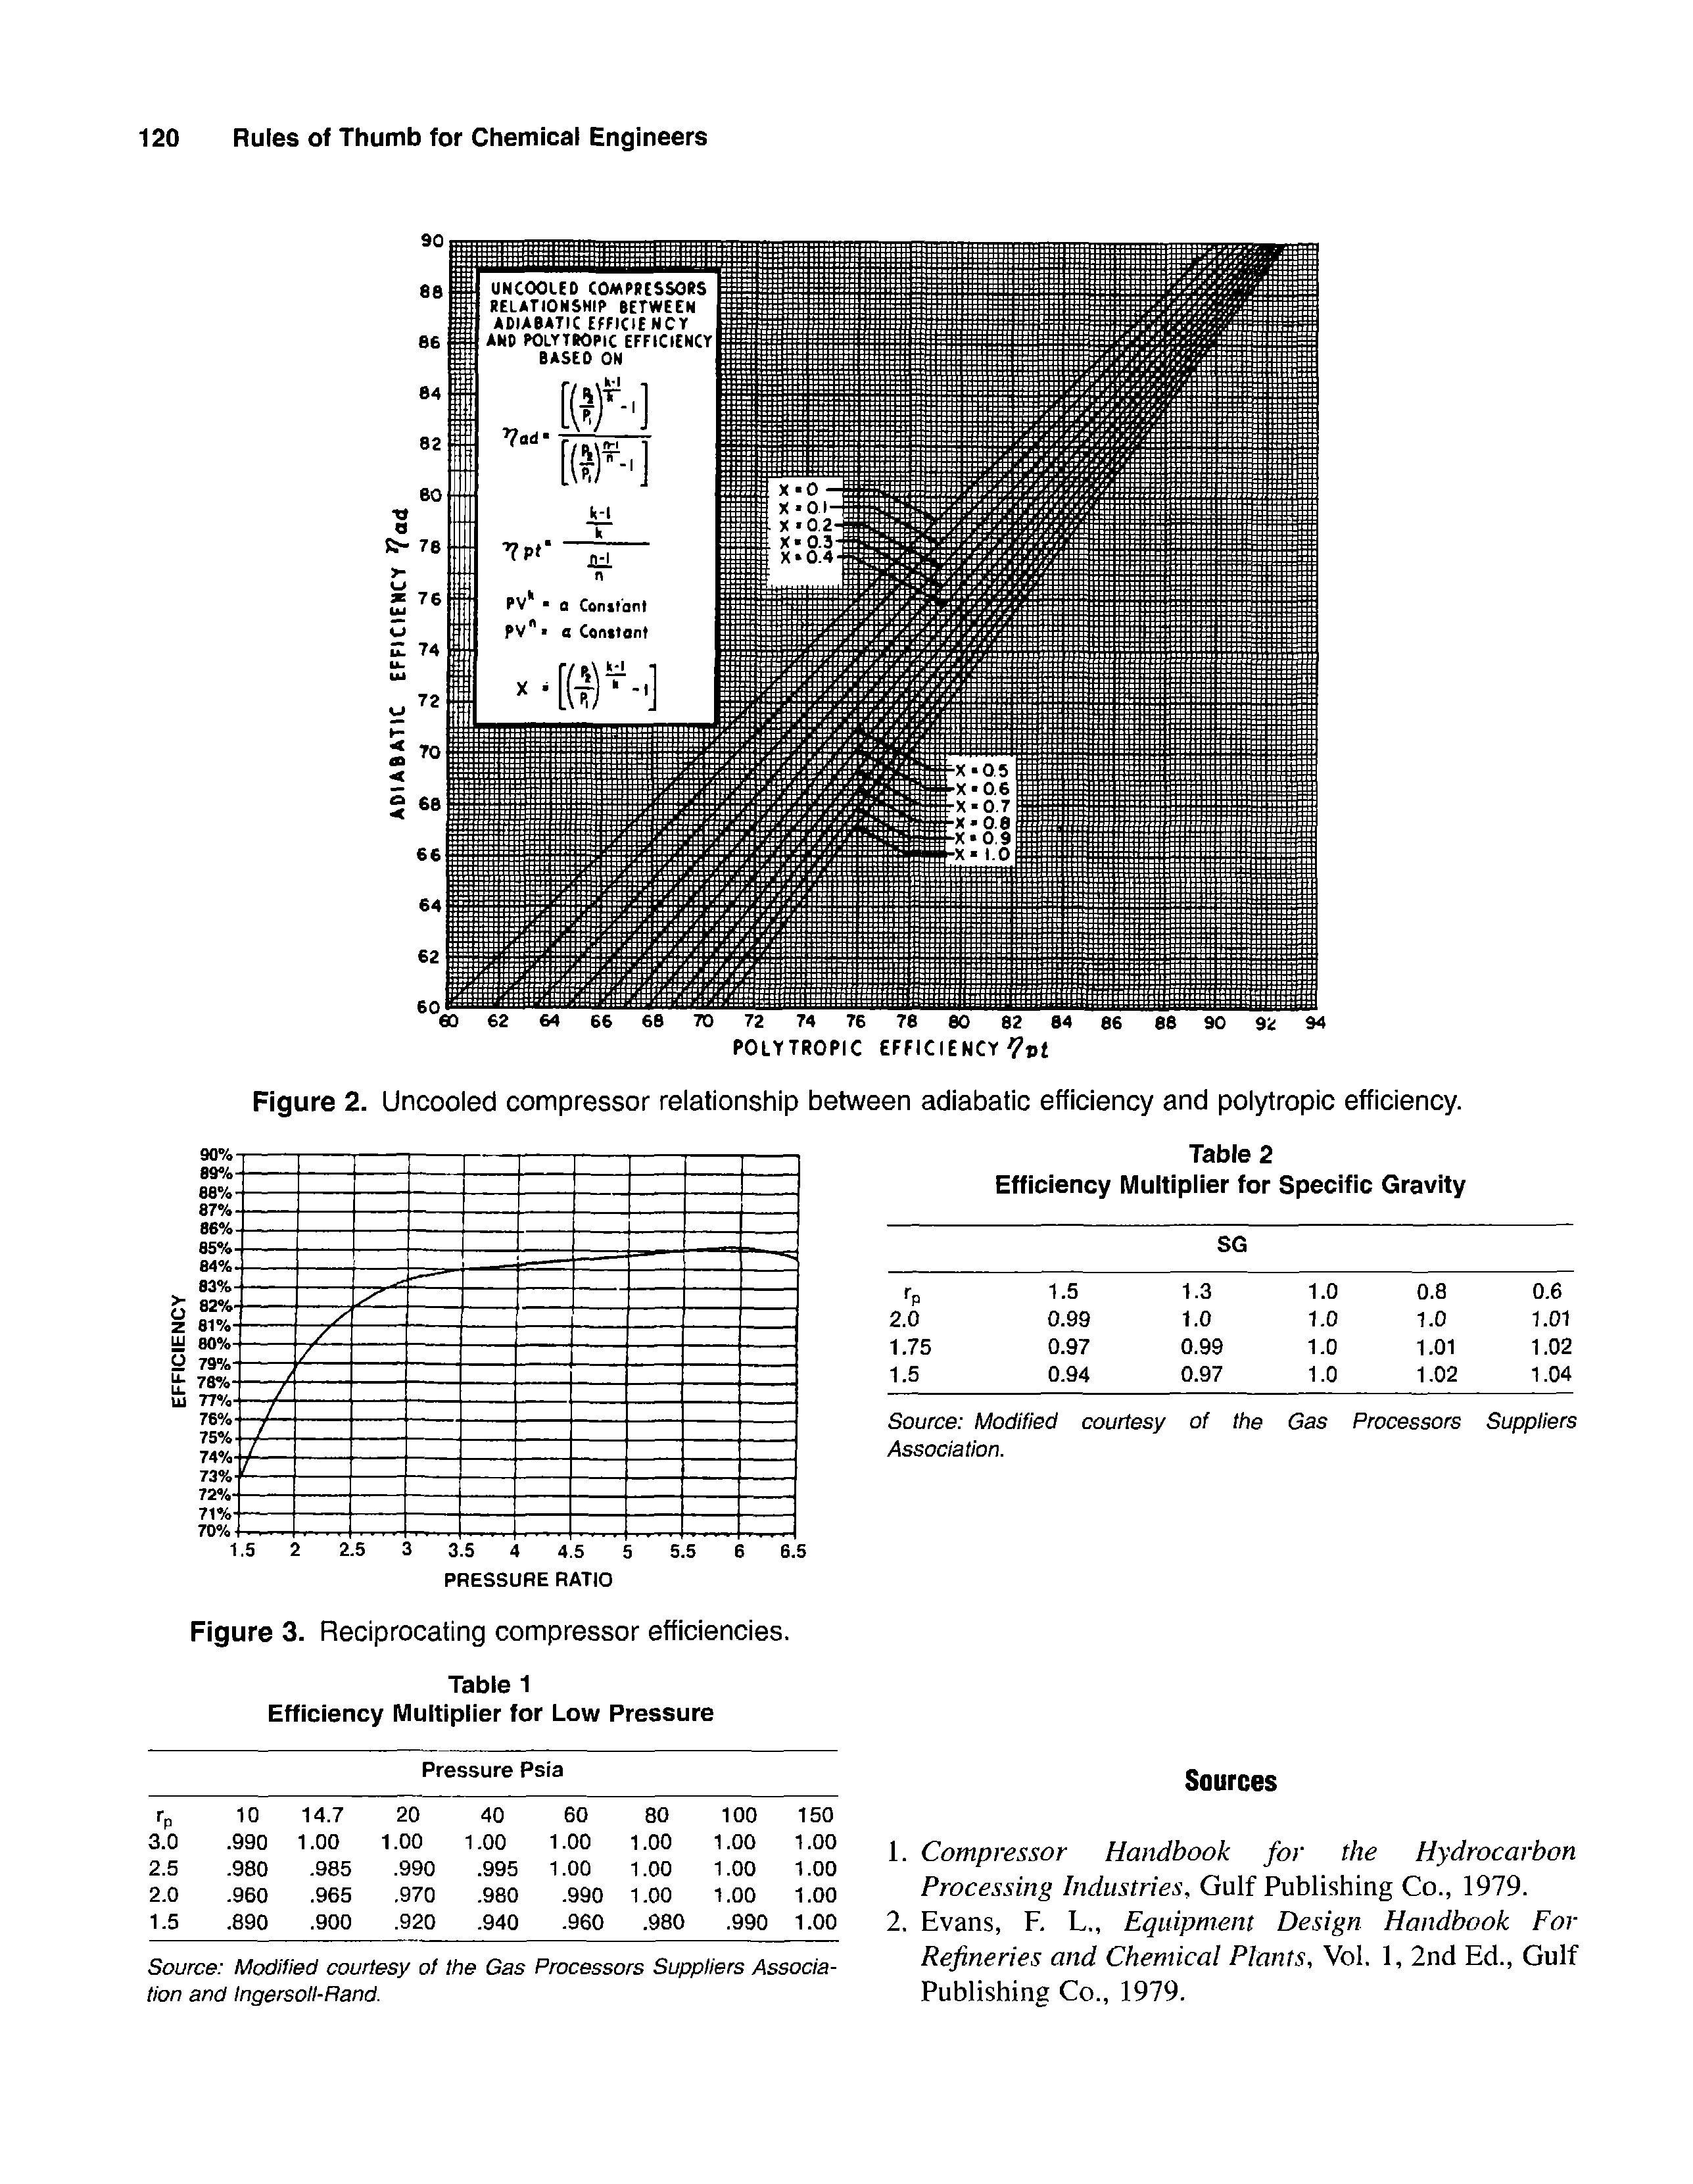 Figure 2. Uncooled compressor relationship between adiabatic efficiency and polytropic efficiency.